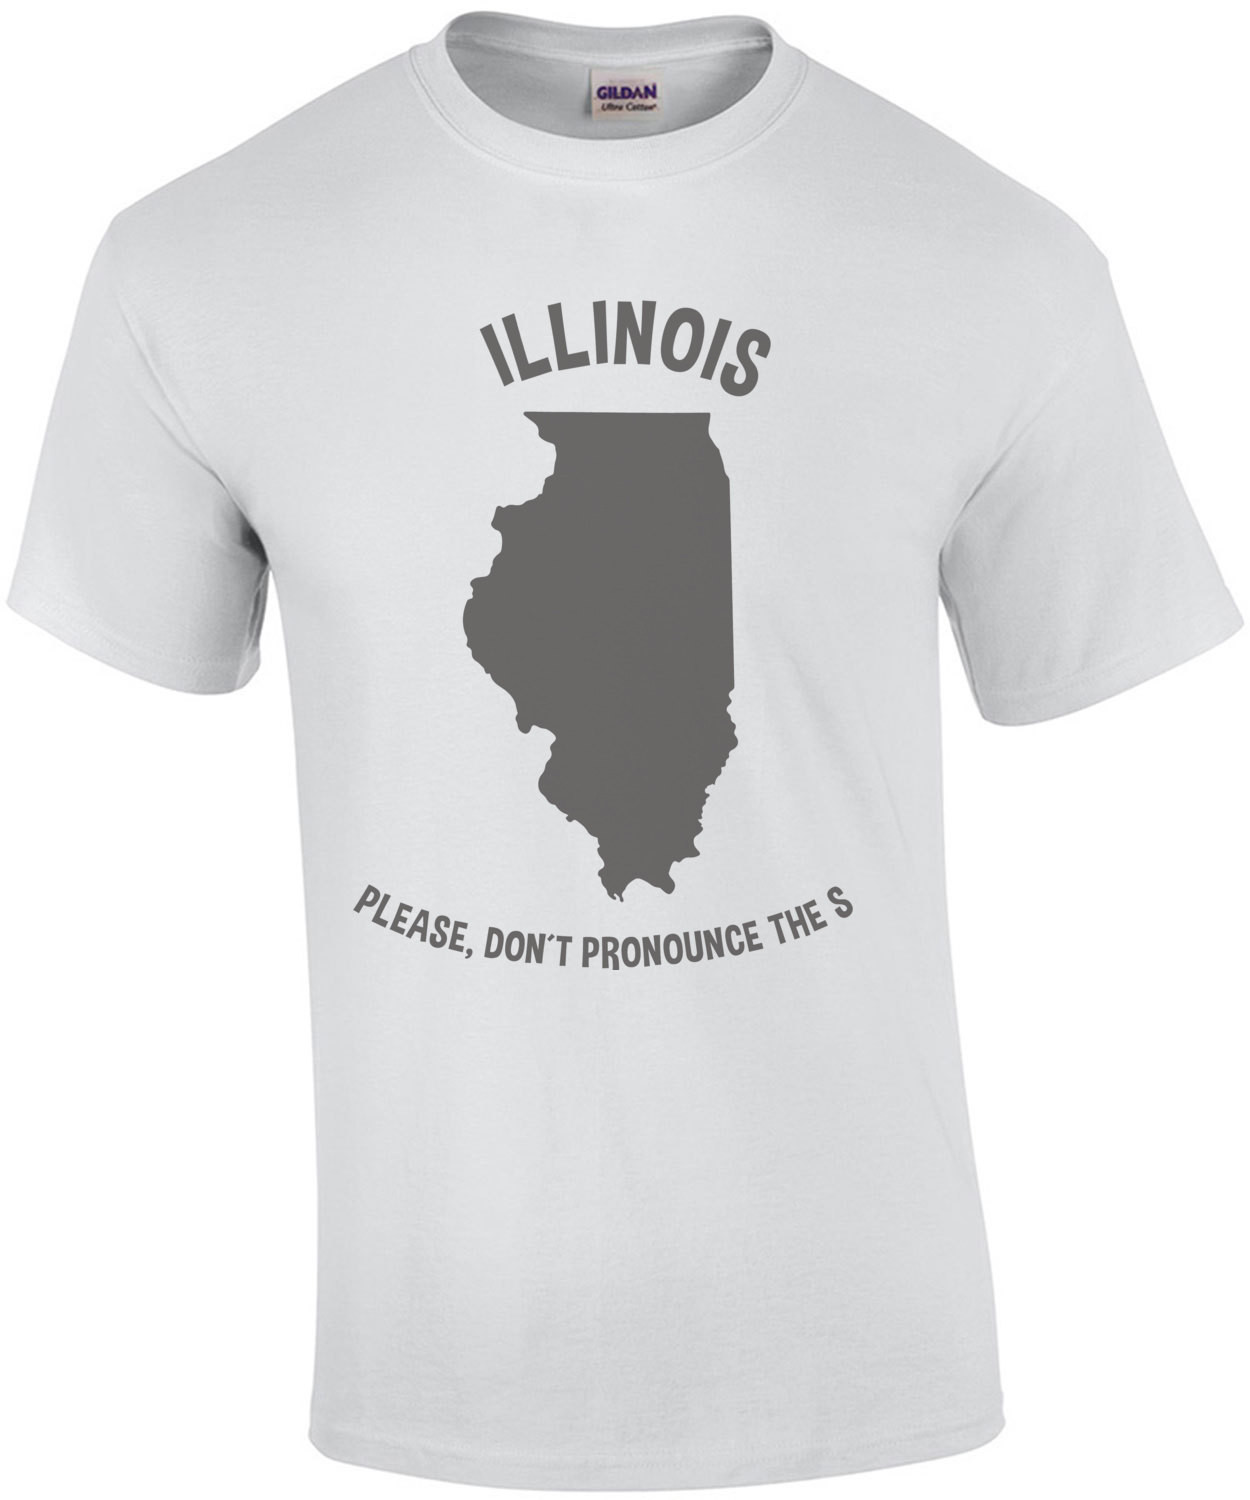 Illinois Please don't pronounce the S. - Illinois T-Shirt